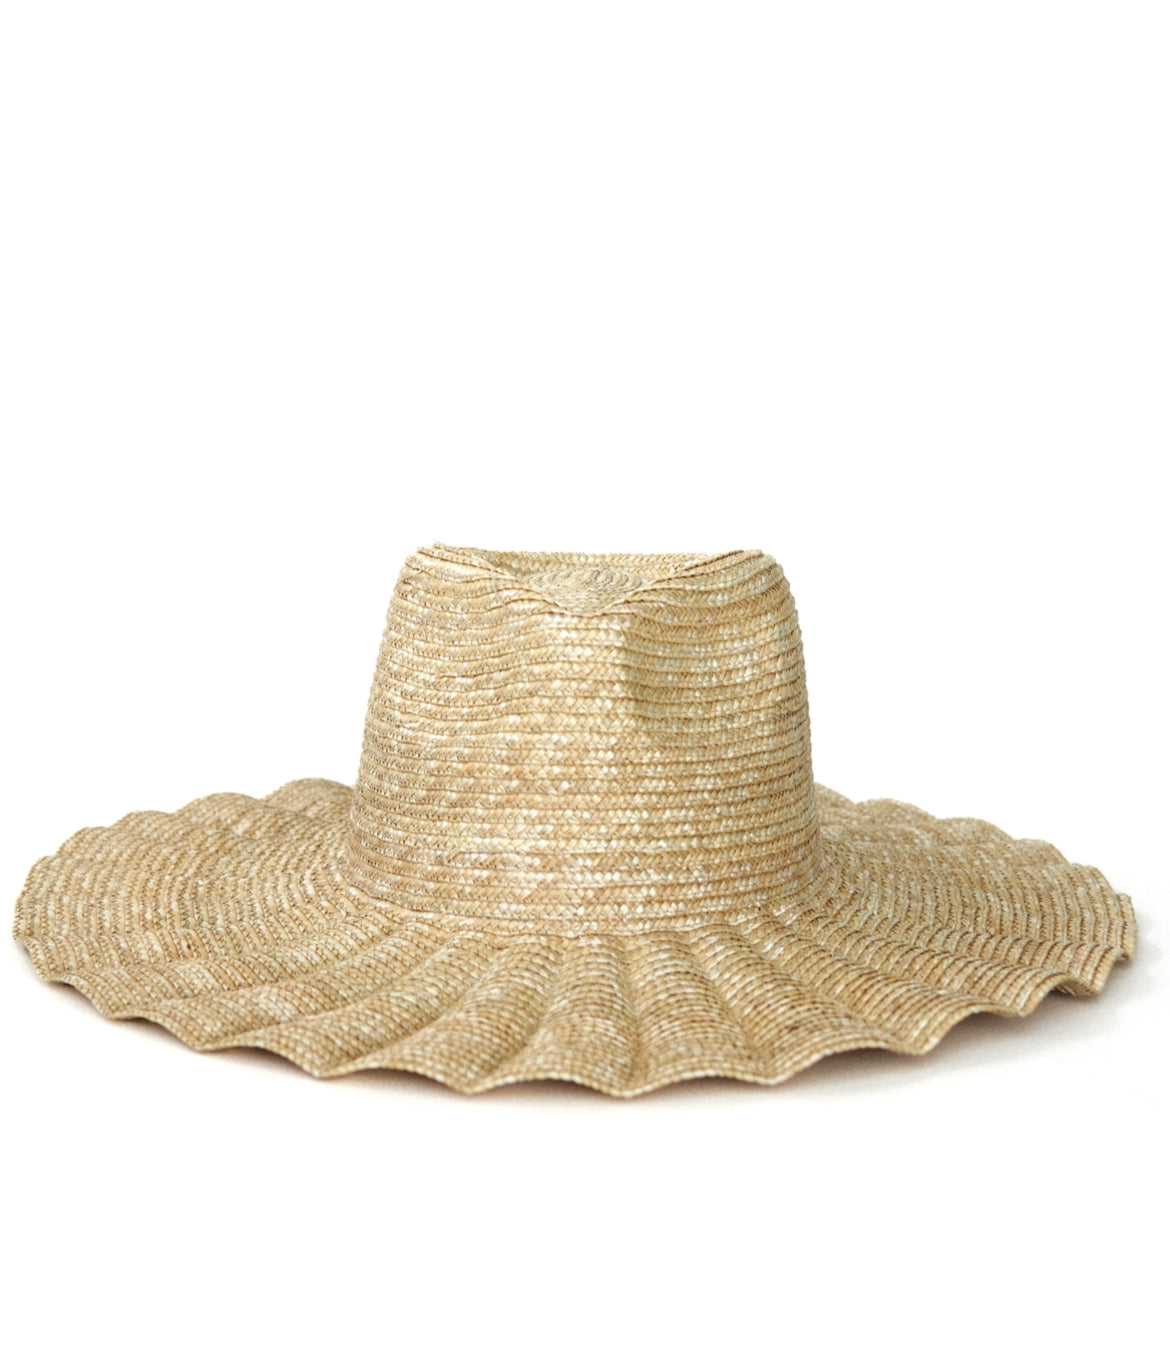 wavy wide brim sun hat, scalloped straw hat